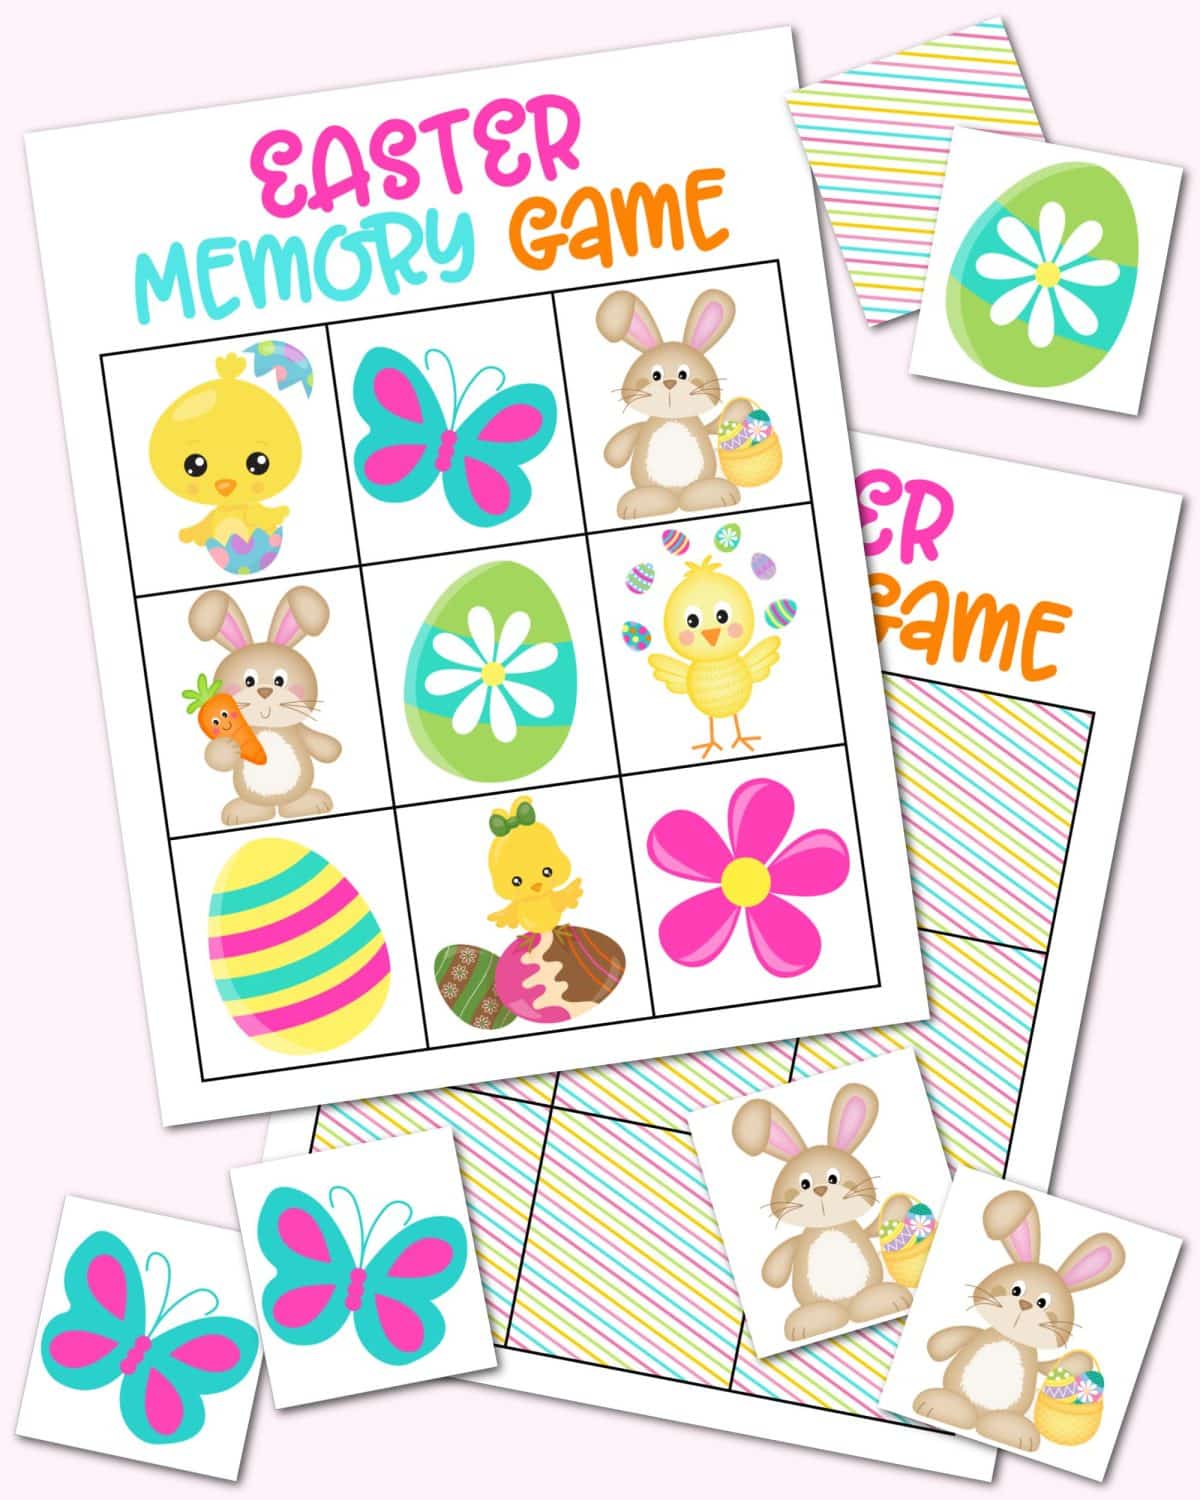 Free printable Easter game